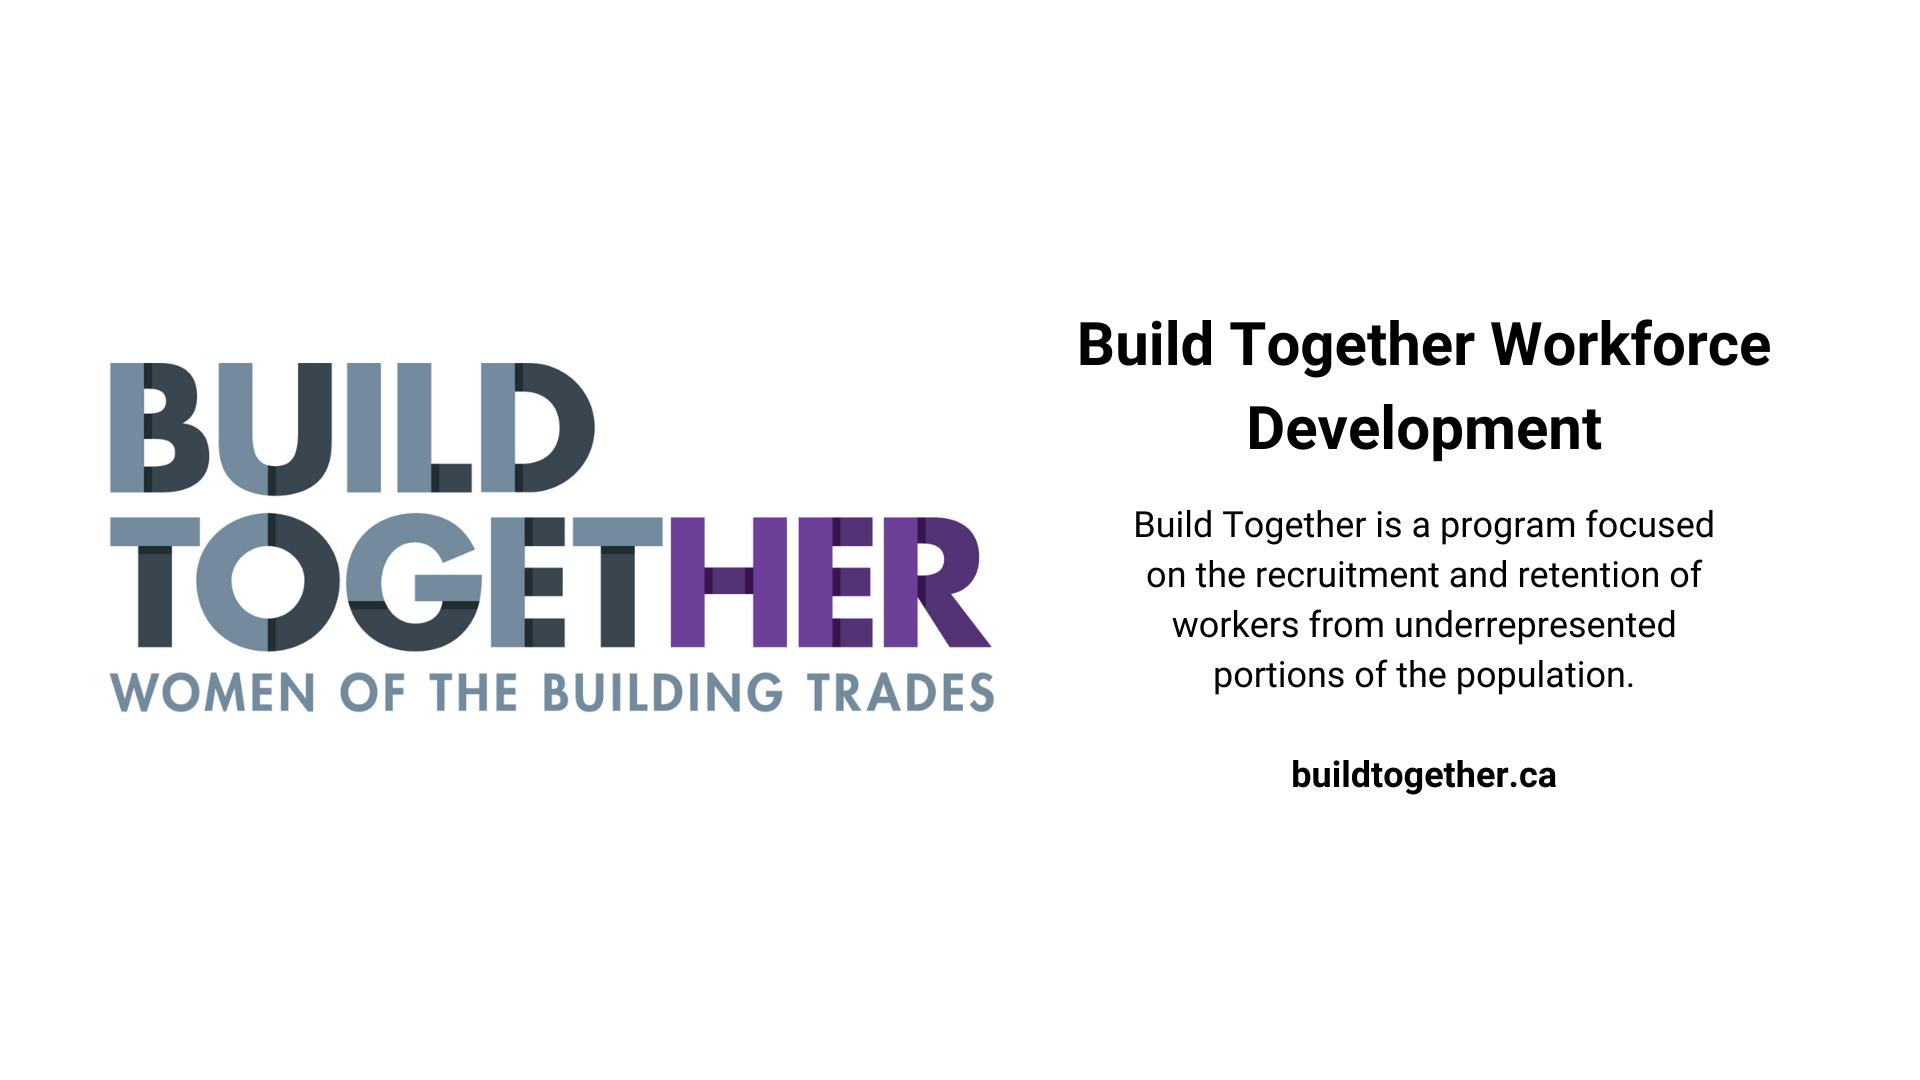 Build Together Workforce Development